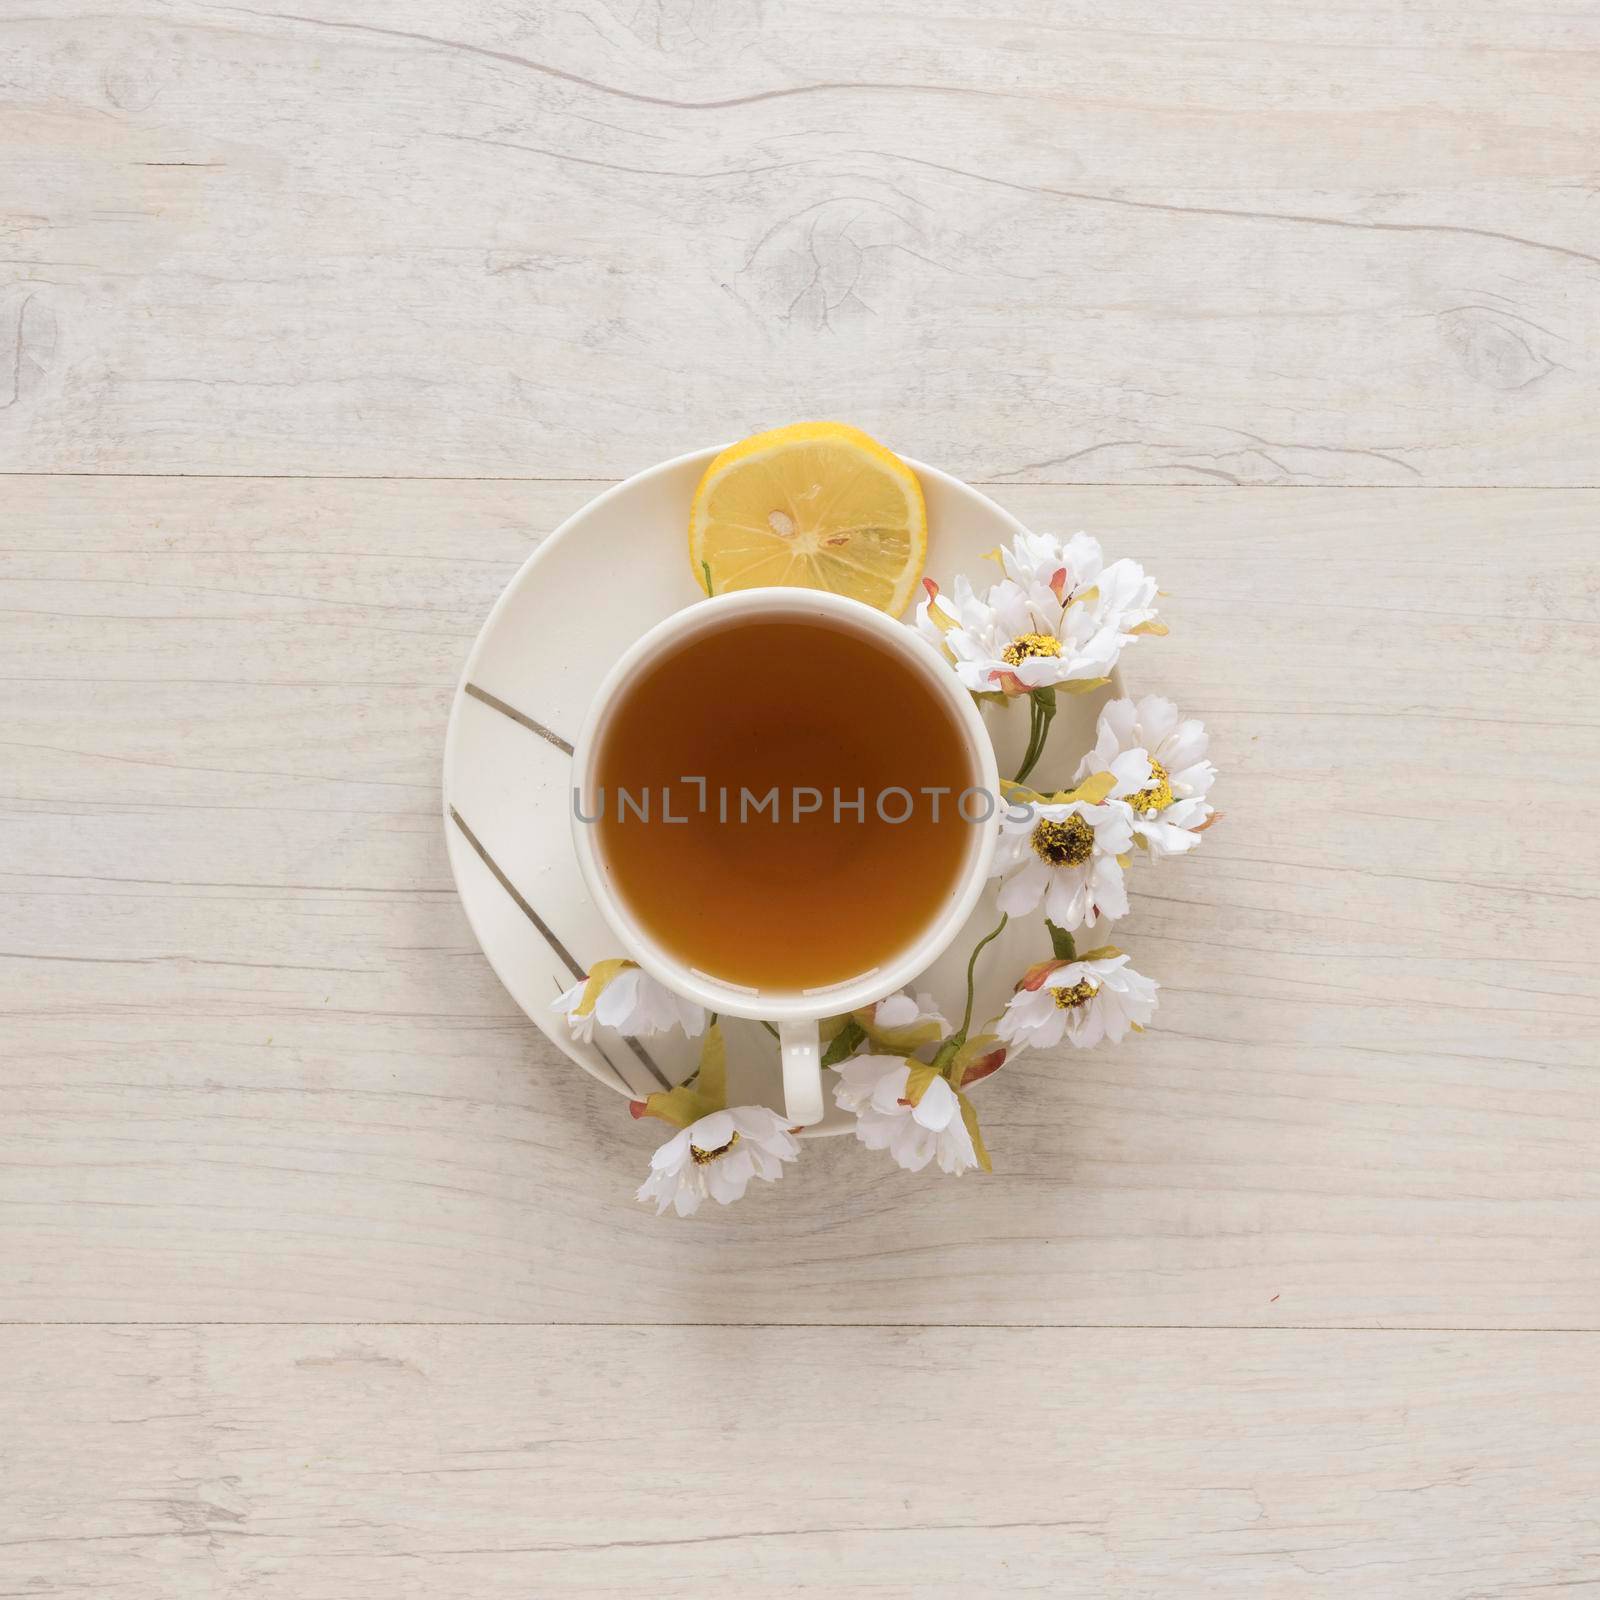 overhead view lemon tea cup with flowers lemon saucer. High quality photo by Zahard